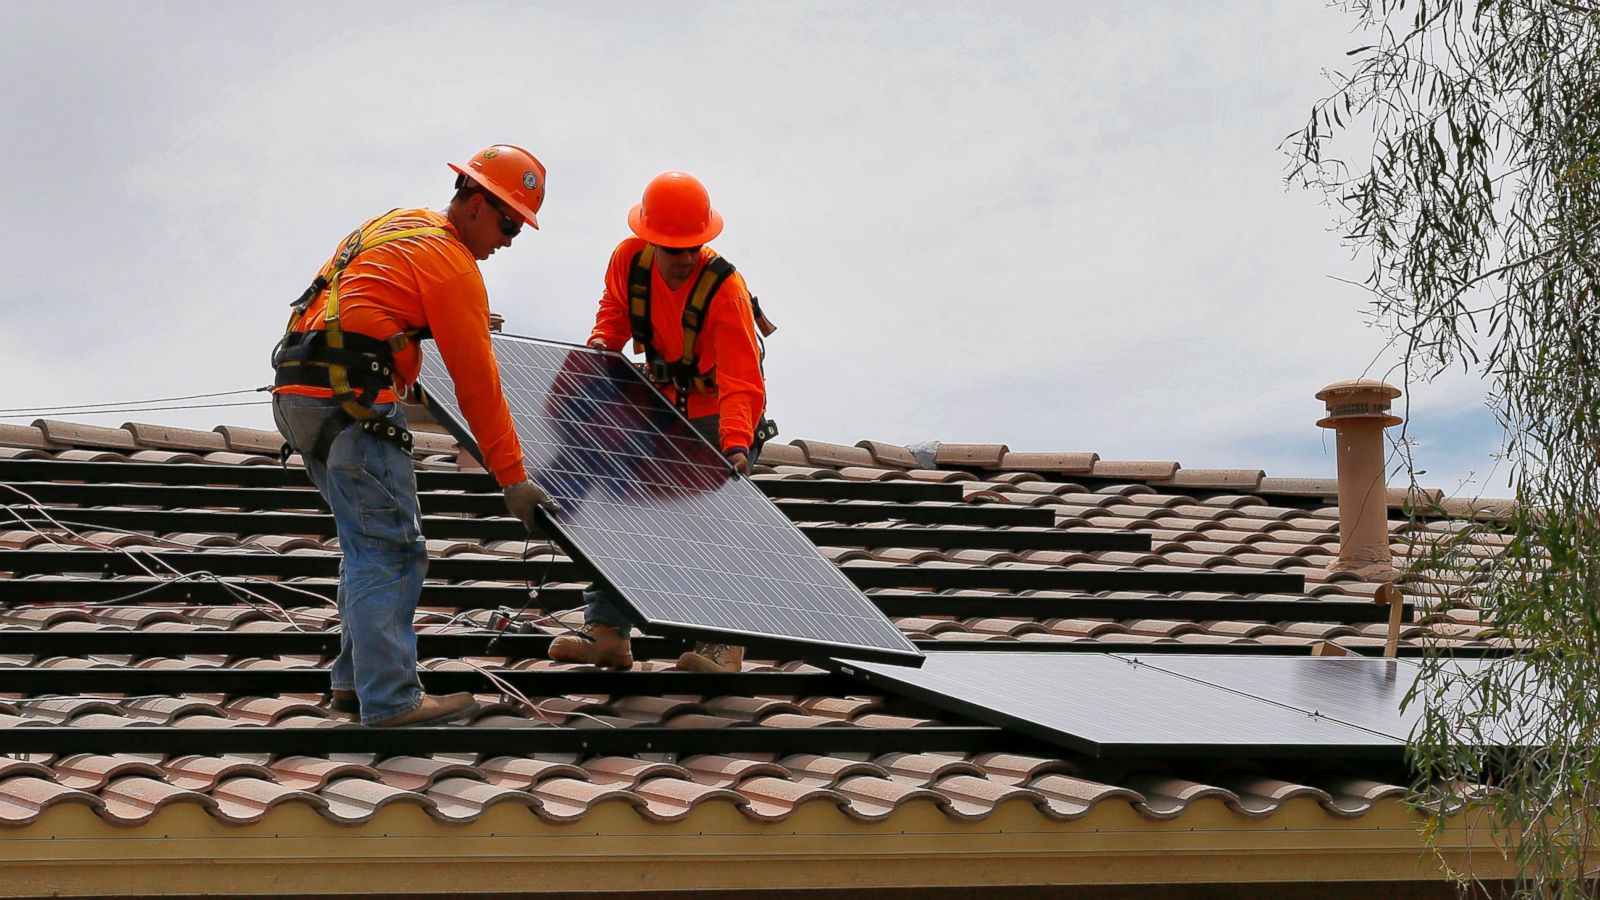 Electricians install solar panels on a roof for Arizona Public Service company in Goodyear, Ariz. (Photo by Matt York, Associated Press)